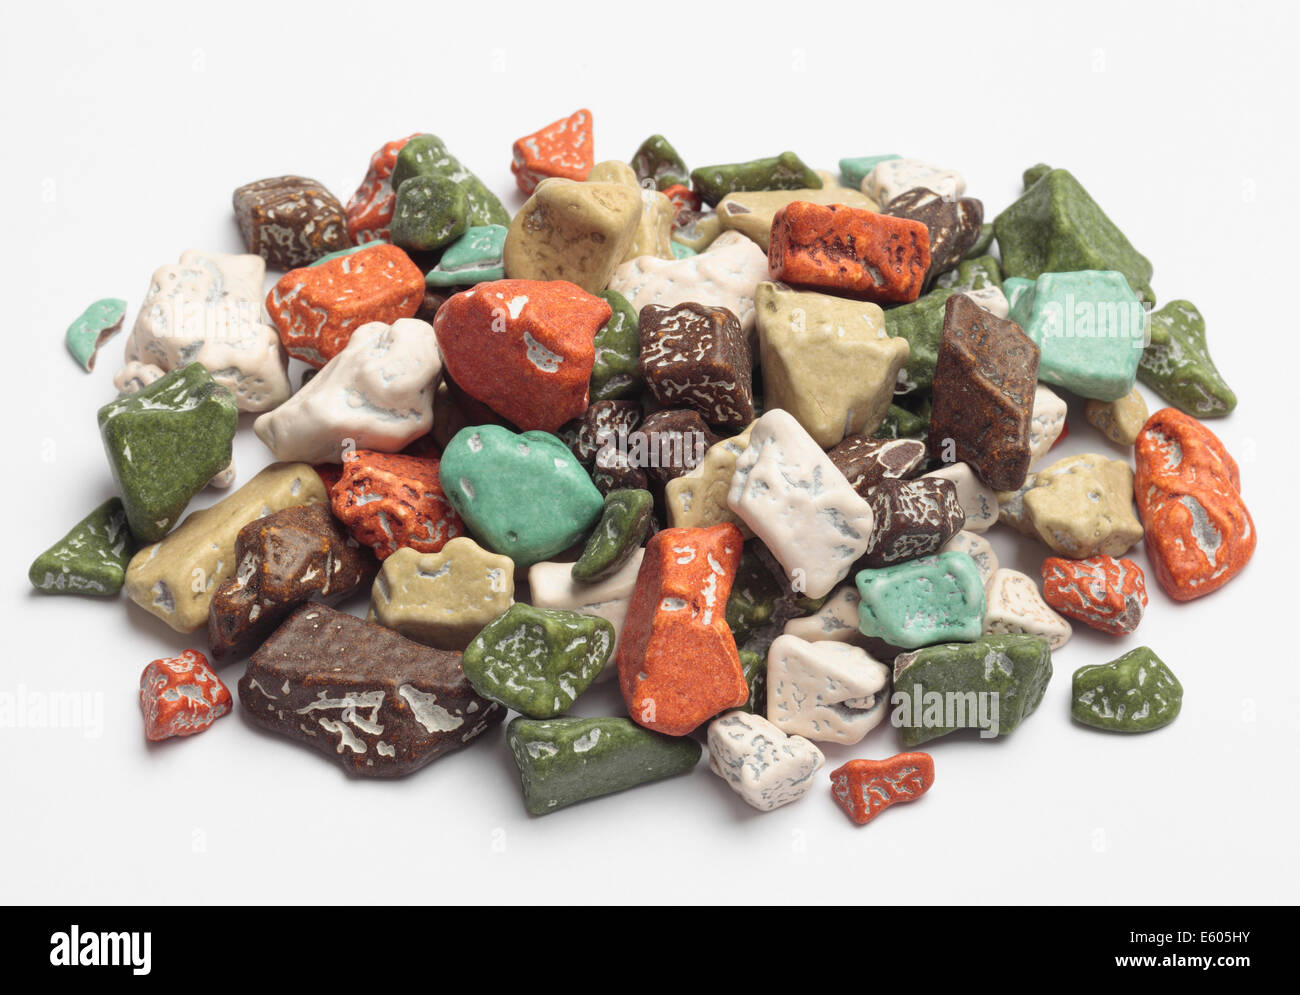 Novelty chocolate rocks. Stock Photo